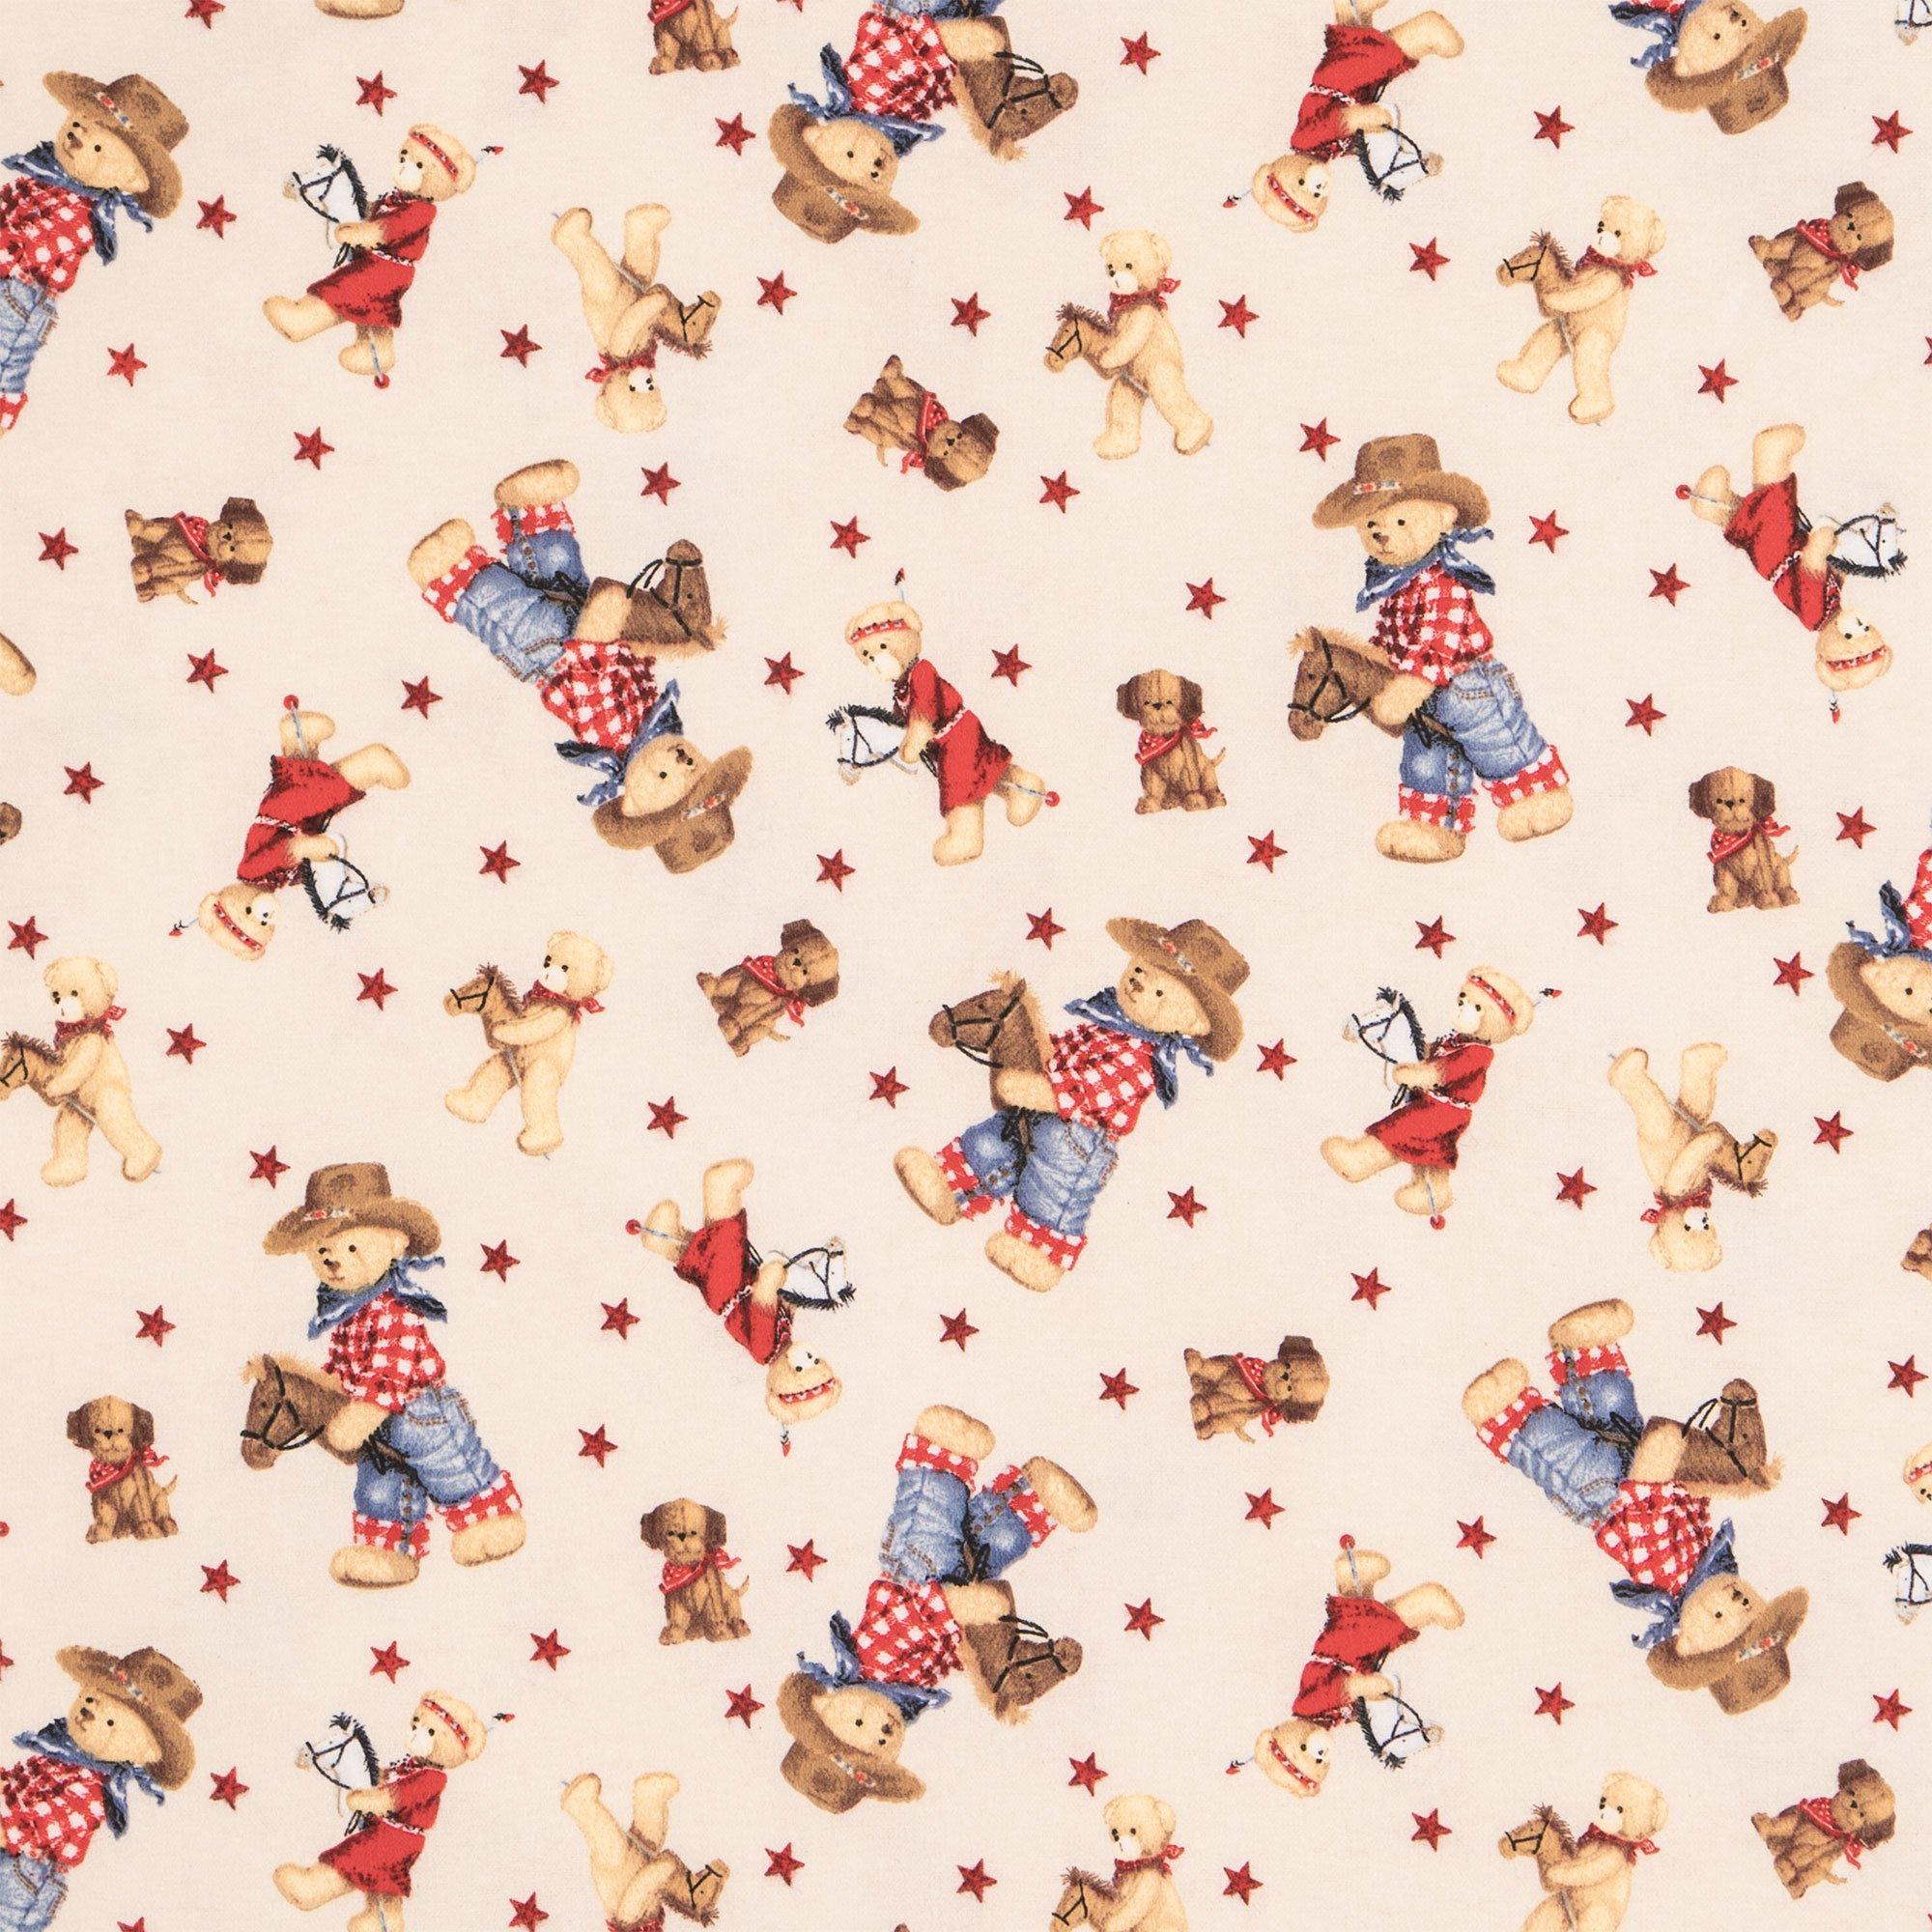 Teddy Bear Print Fabric Material